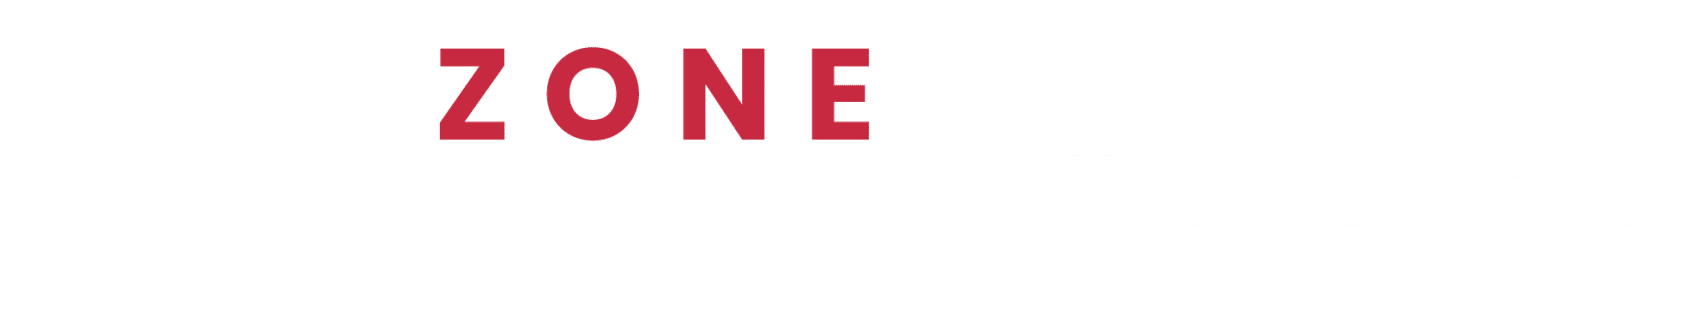 Prep Zone Academy | GMAT